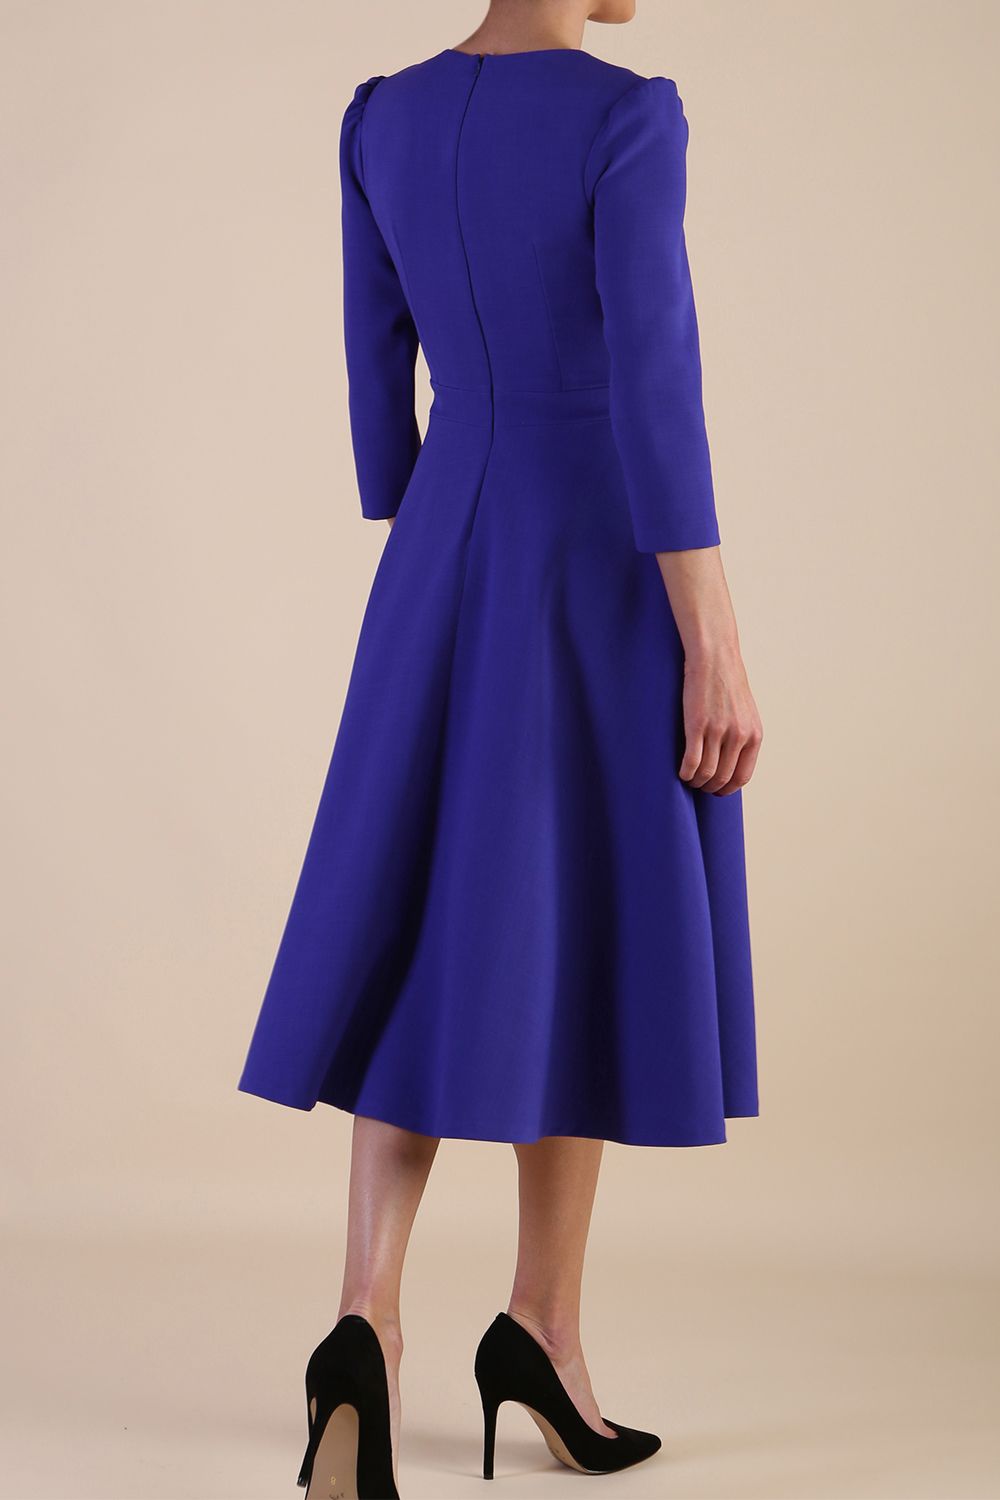 Model wearing diva catwalk Kate 3/4 Length Sleeve A-Line Swing Dress in Spectrum Indigo with pockets back